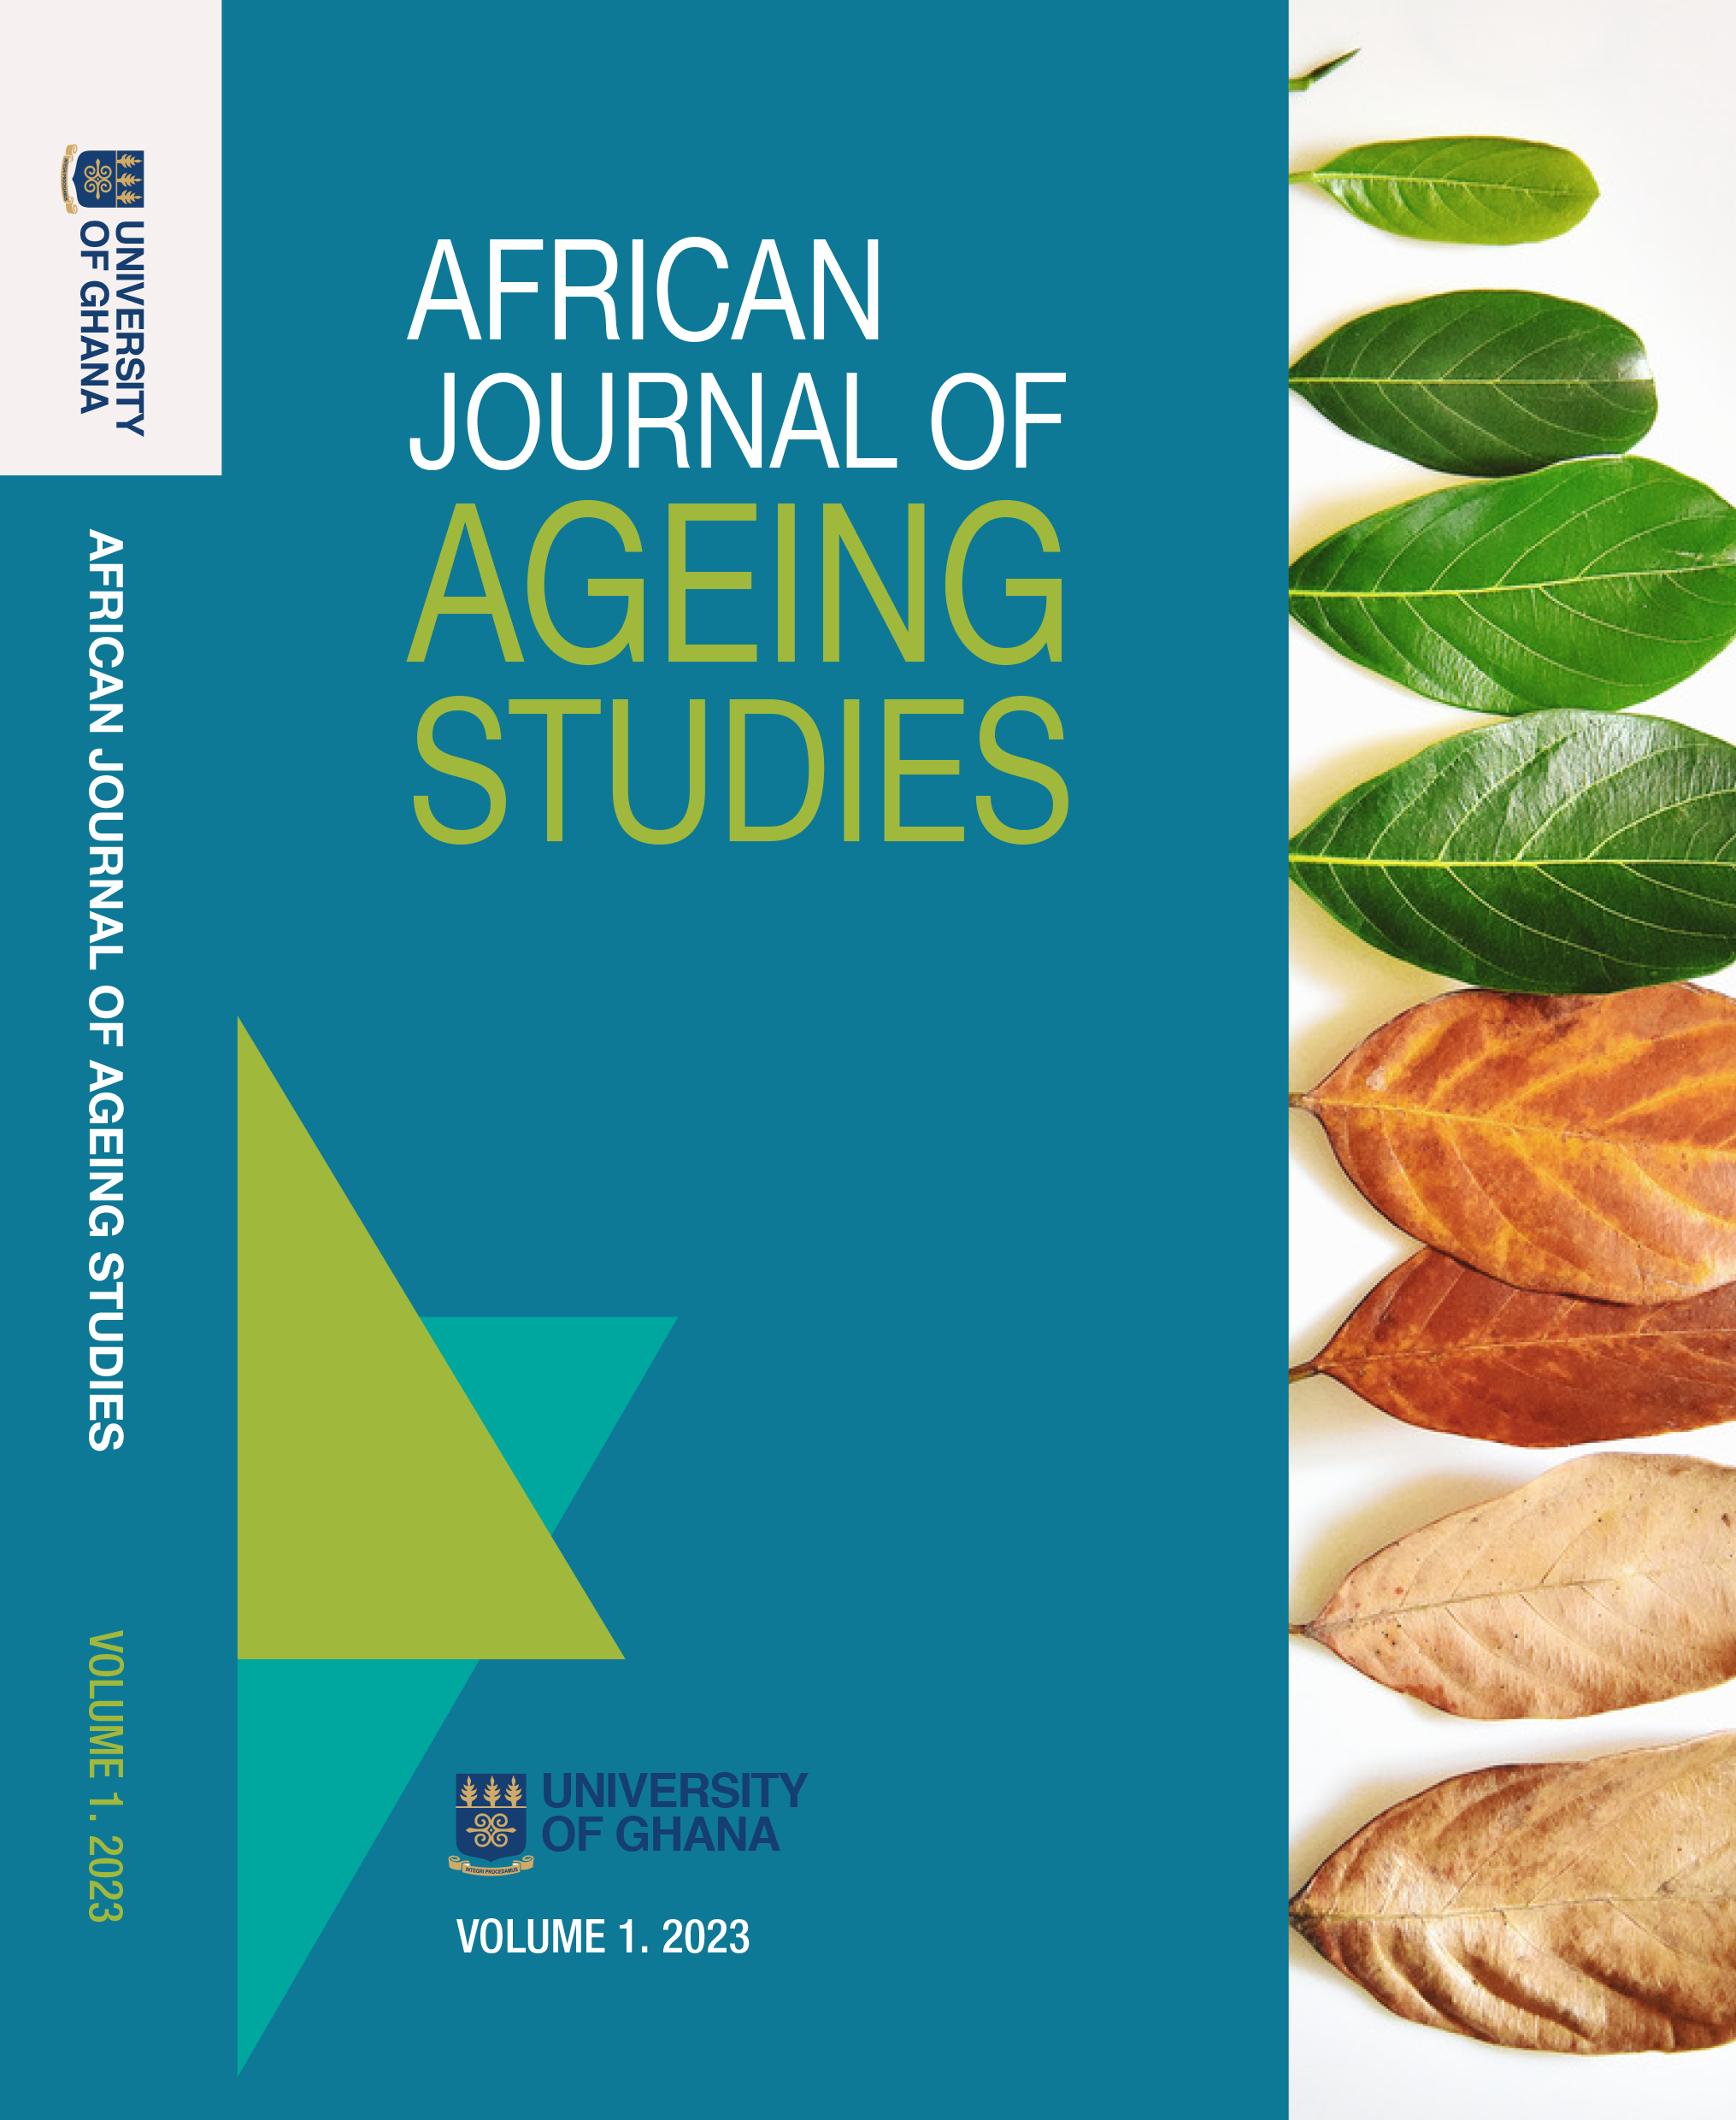 African Journal of Ageing Studies